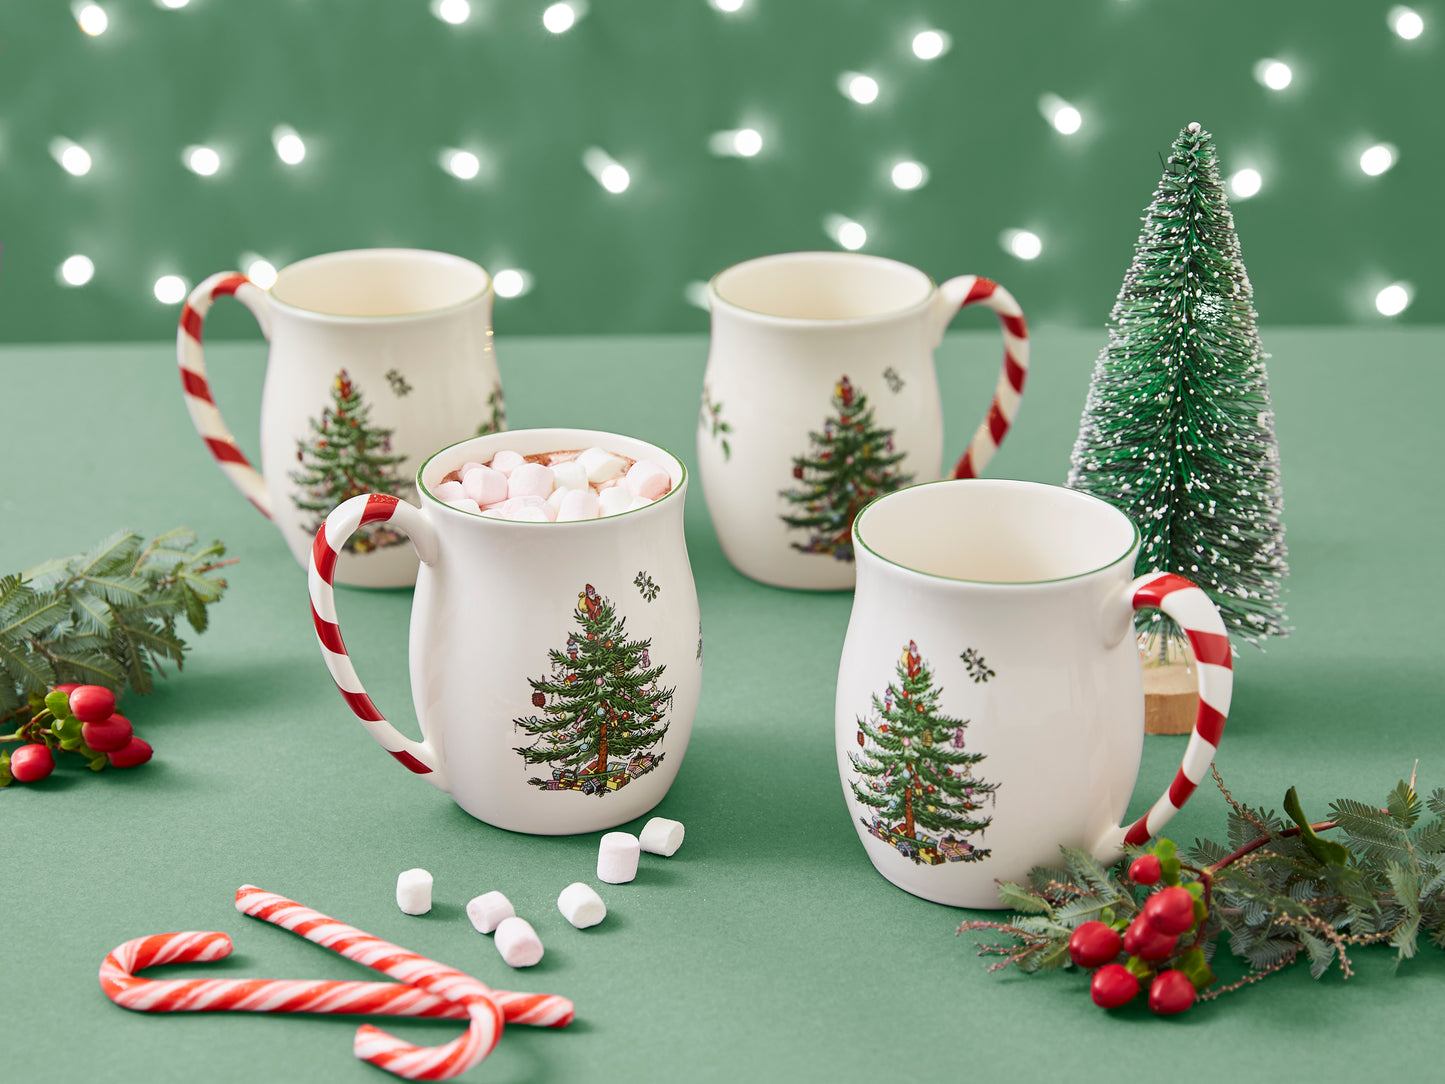 Spode Christmas Tree Set of 4 Candy Cane Mugs